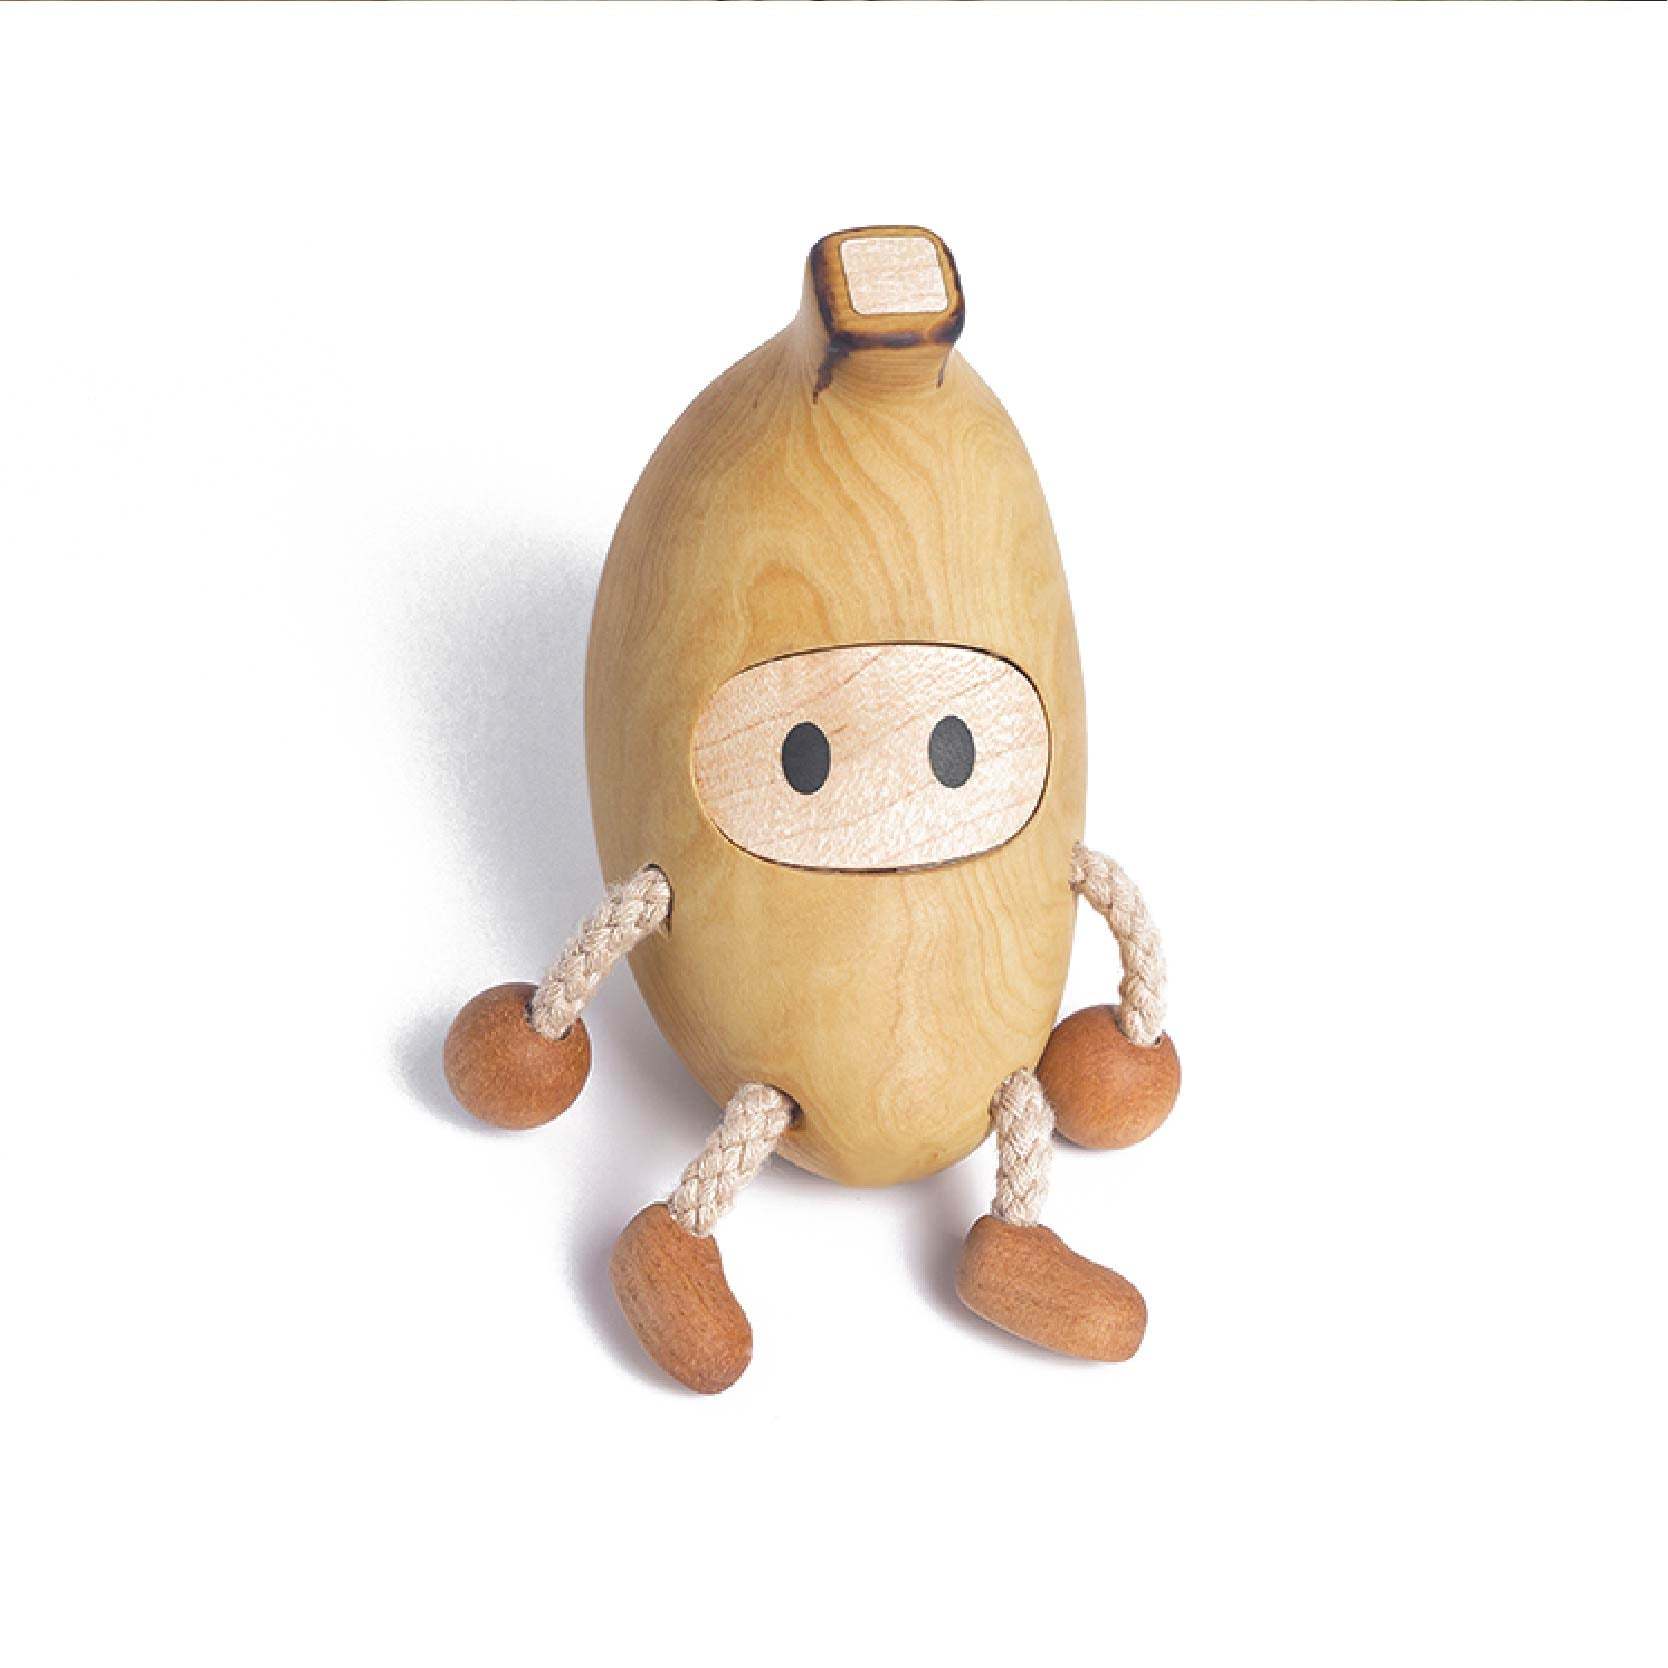 Peel-Off Banana Plush Stuffed Toy - Kid Stuffed Fruit Toy